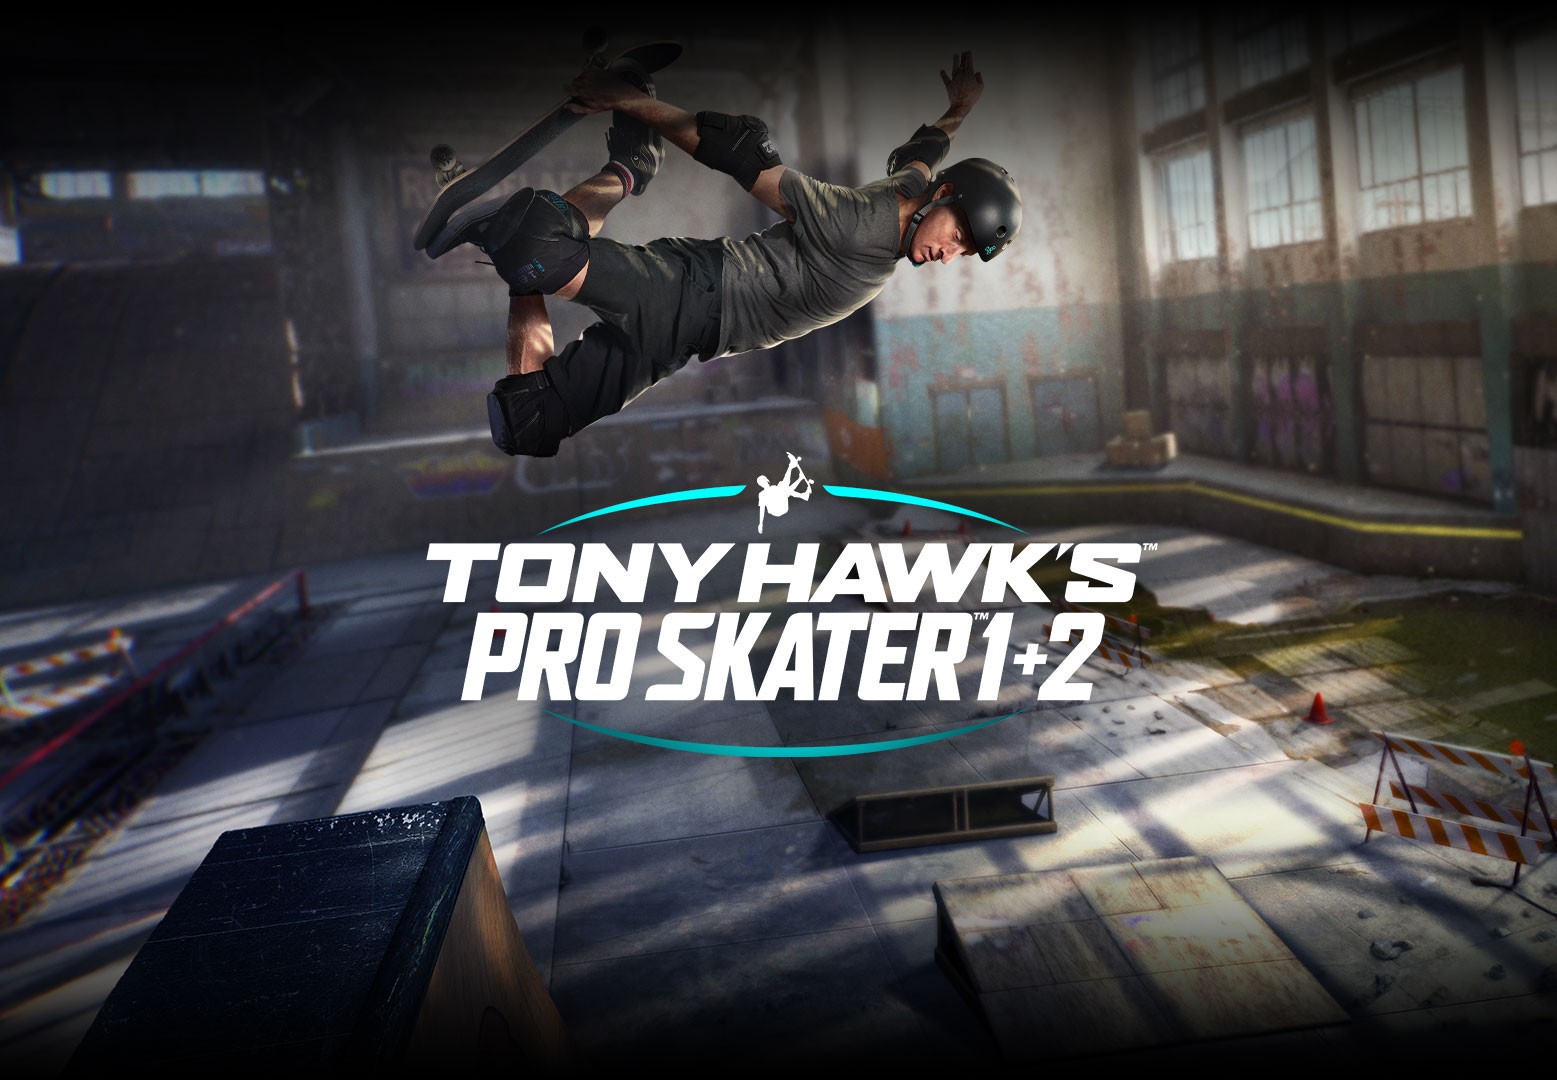 Tony Hawk's Pro Skater 1 + 2 PlayStation 4 Account Pixelpuffin.net Activation Link